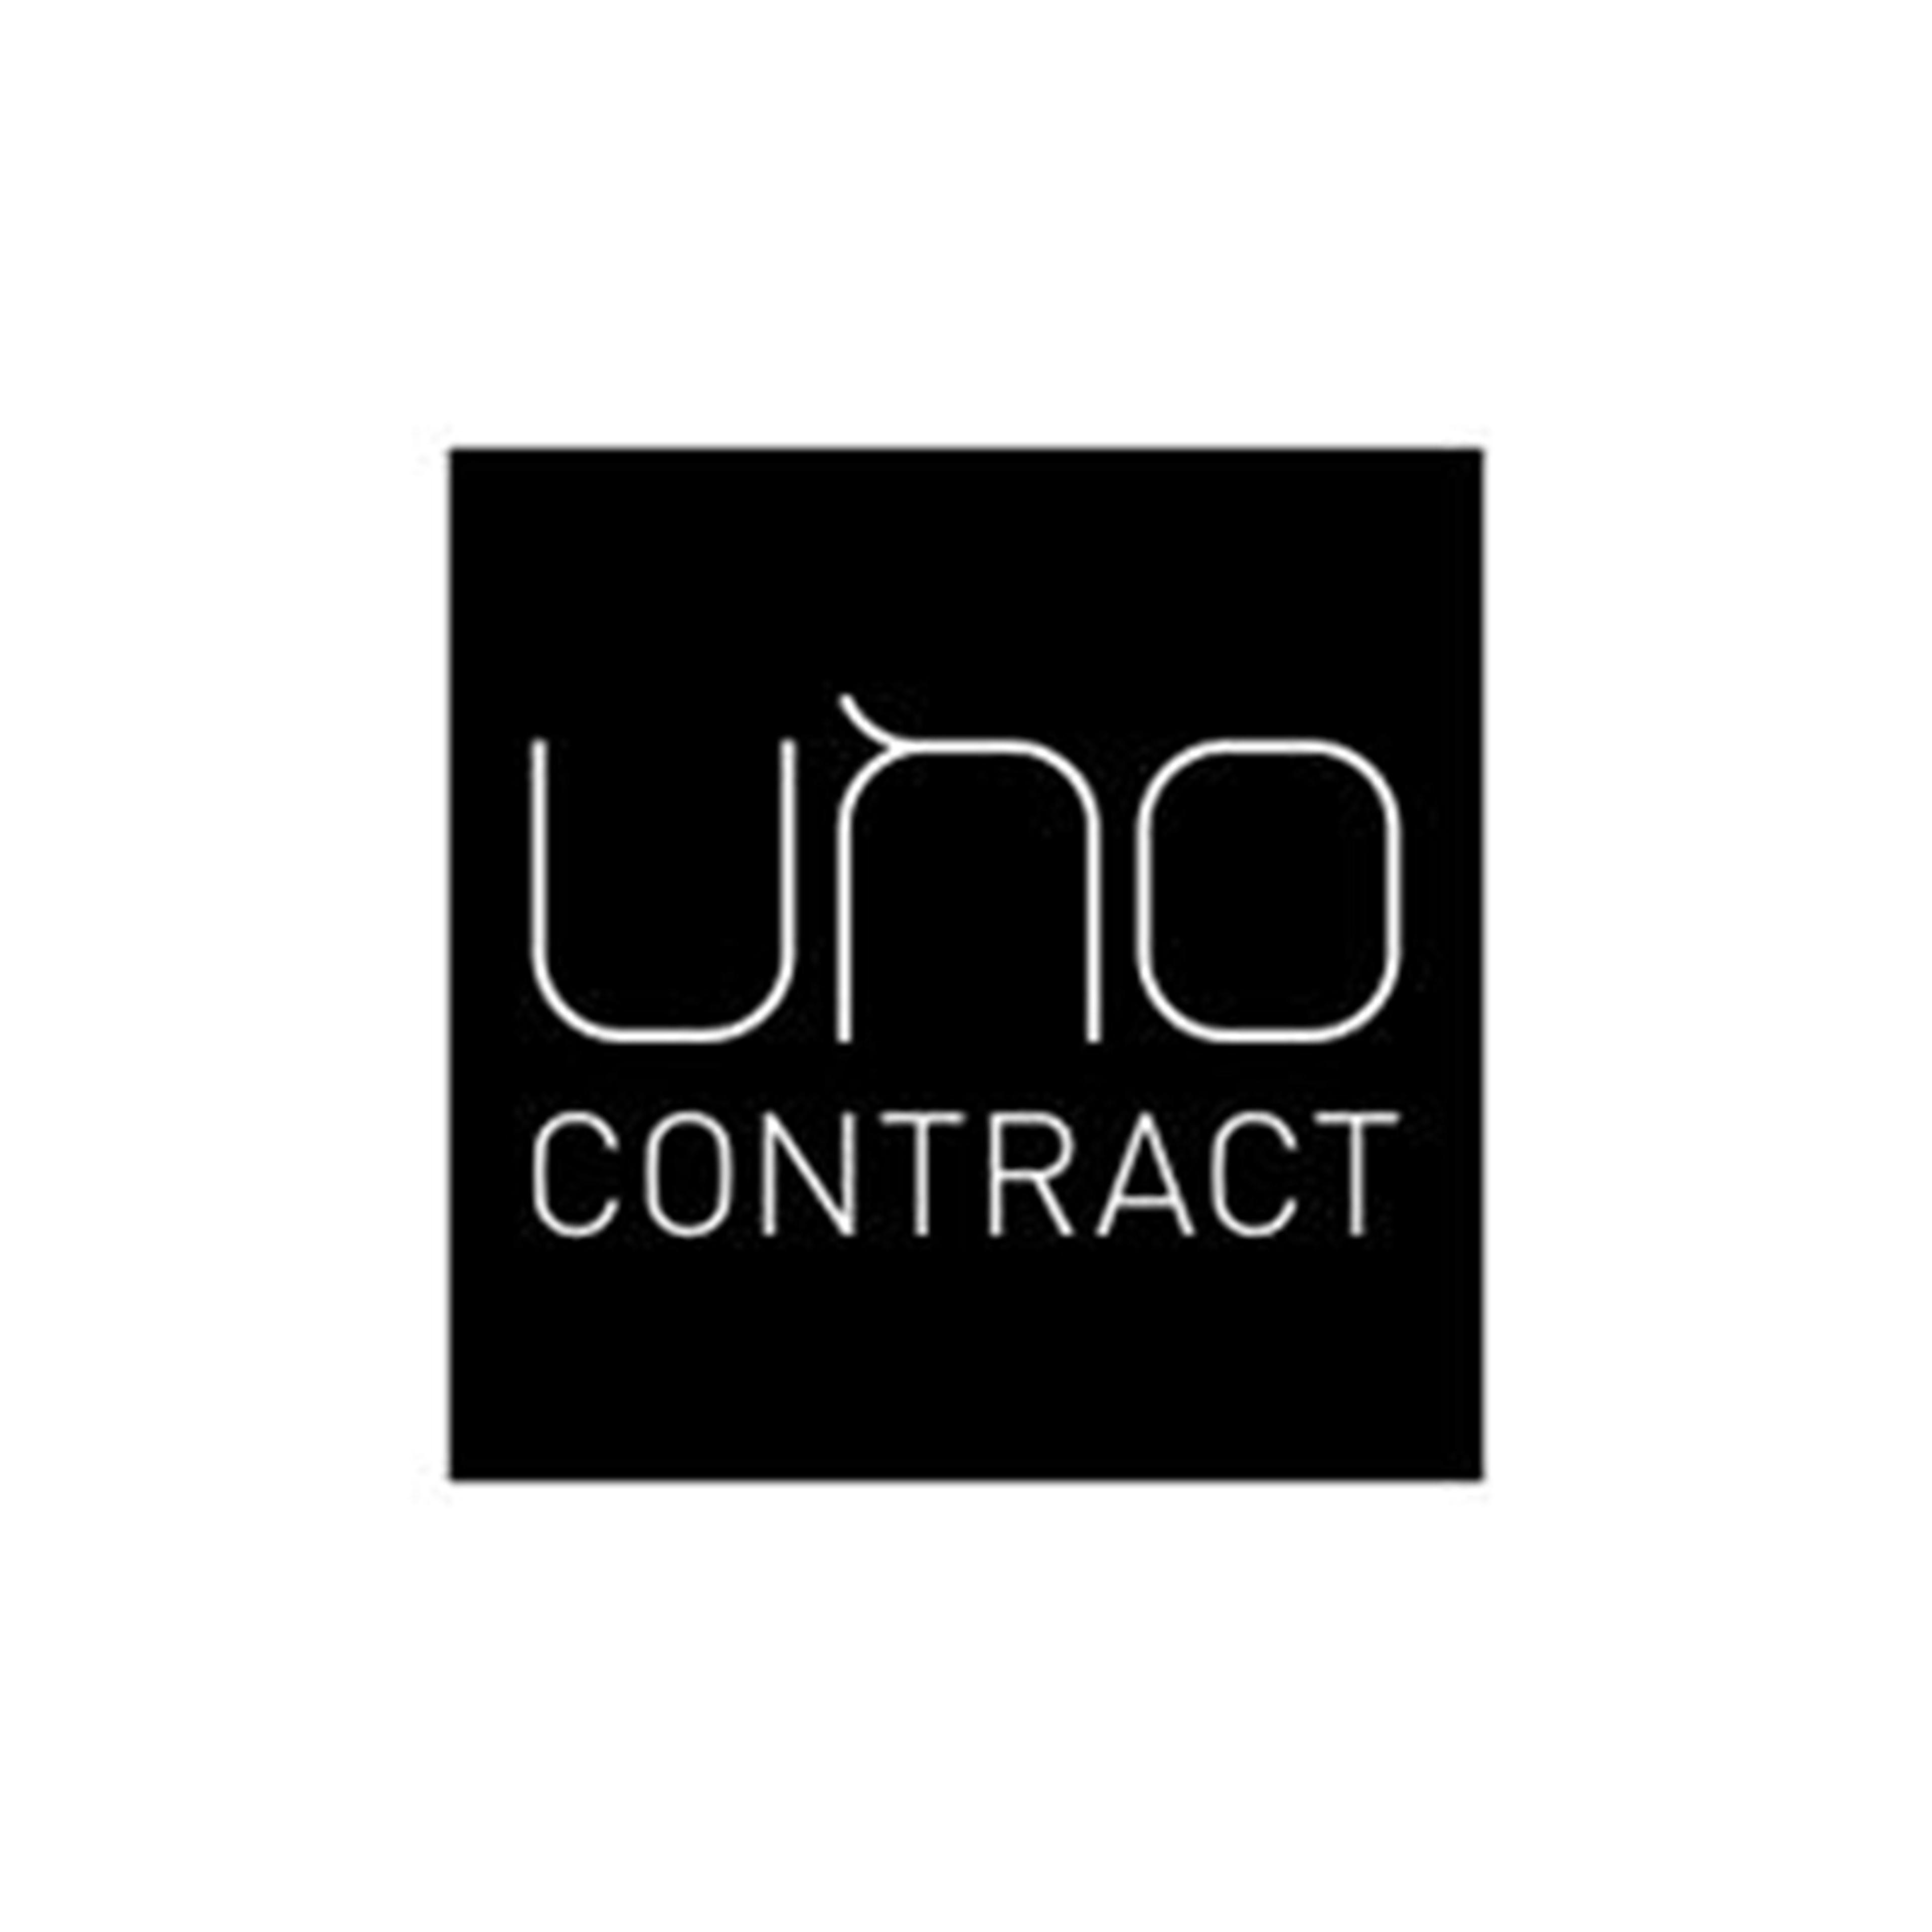 Uno Contract